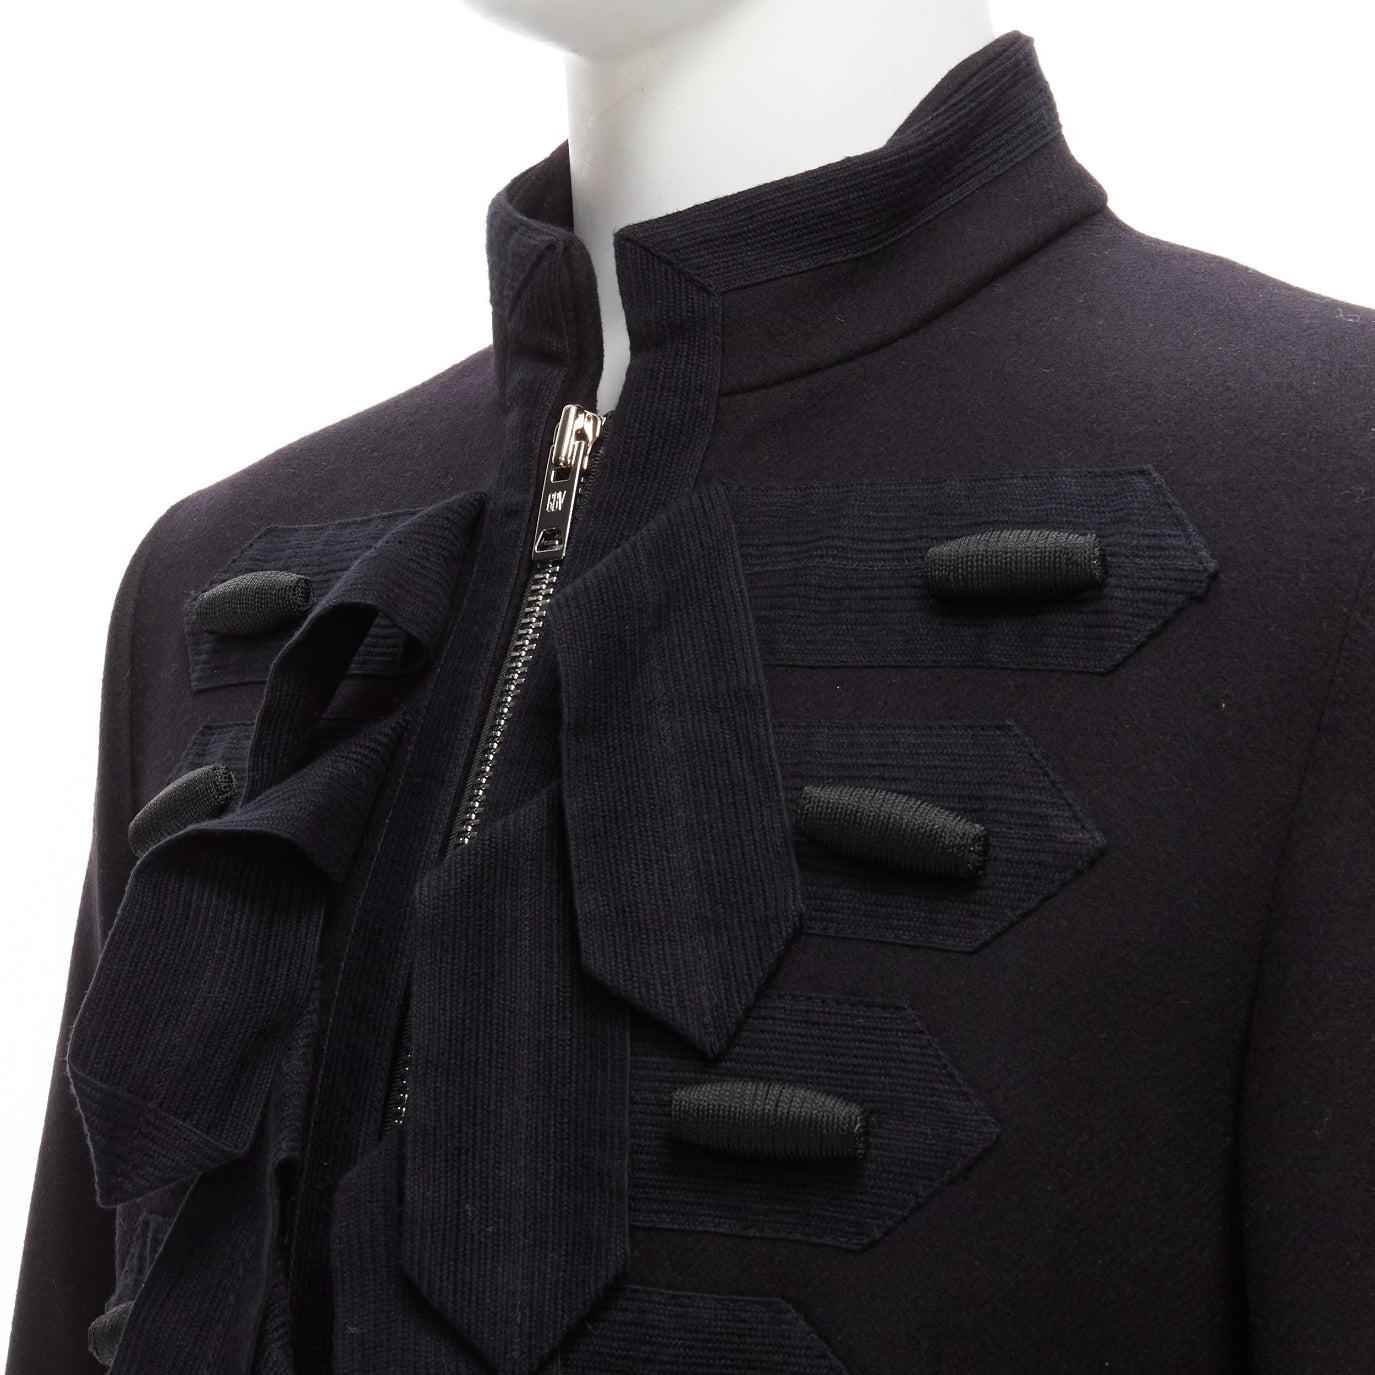 rare new GIAMBATTISTA VALLI H&M black wool blend embellished military coat IT48 M
Reference: JSLE/A00018
Brand: Giambattista Valli
Designer: Giambattista Valli
Collection: H&M
Material: Wool, Blend
Color: Black
Pattern: Solid
Closure: Zip
Lining: